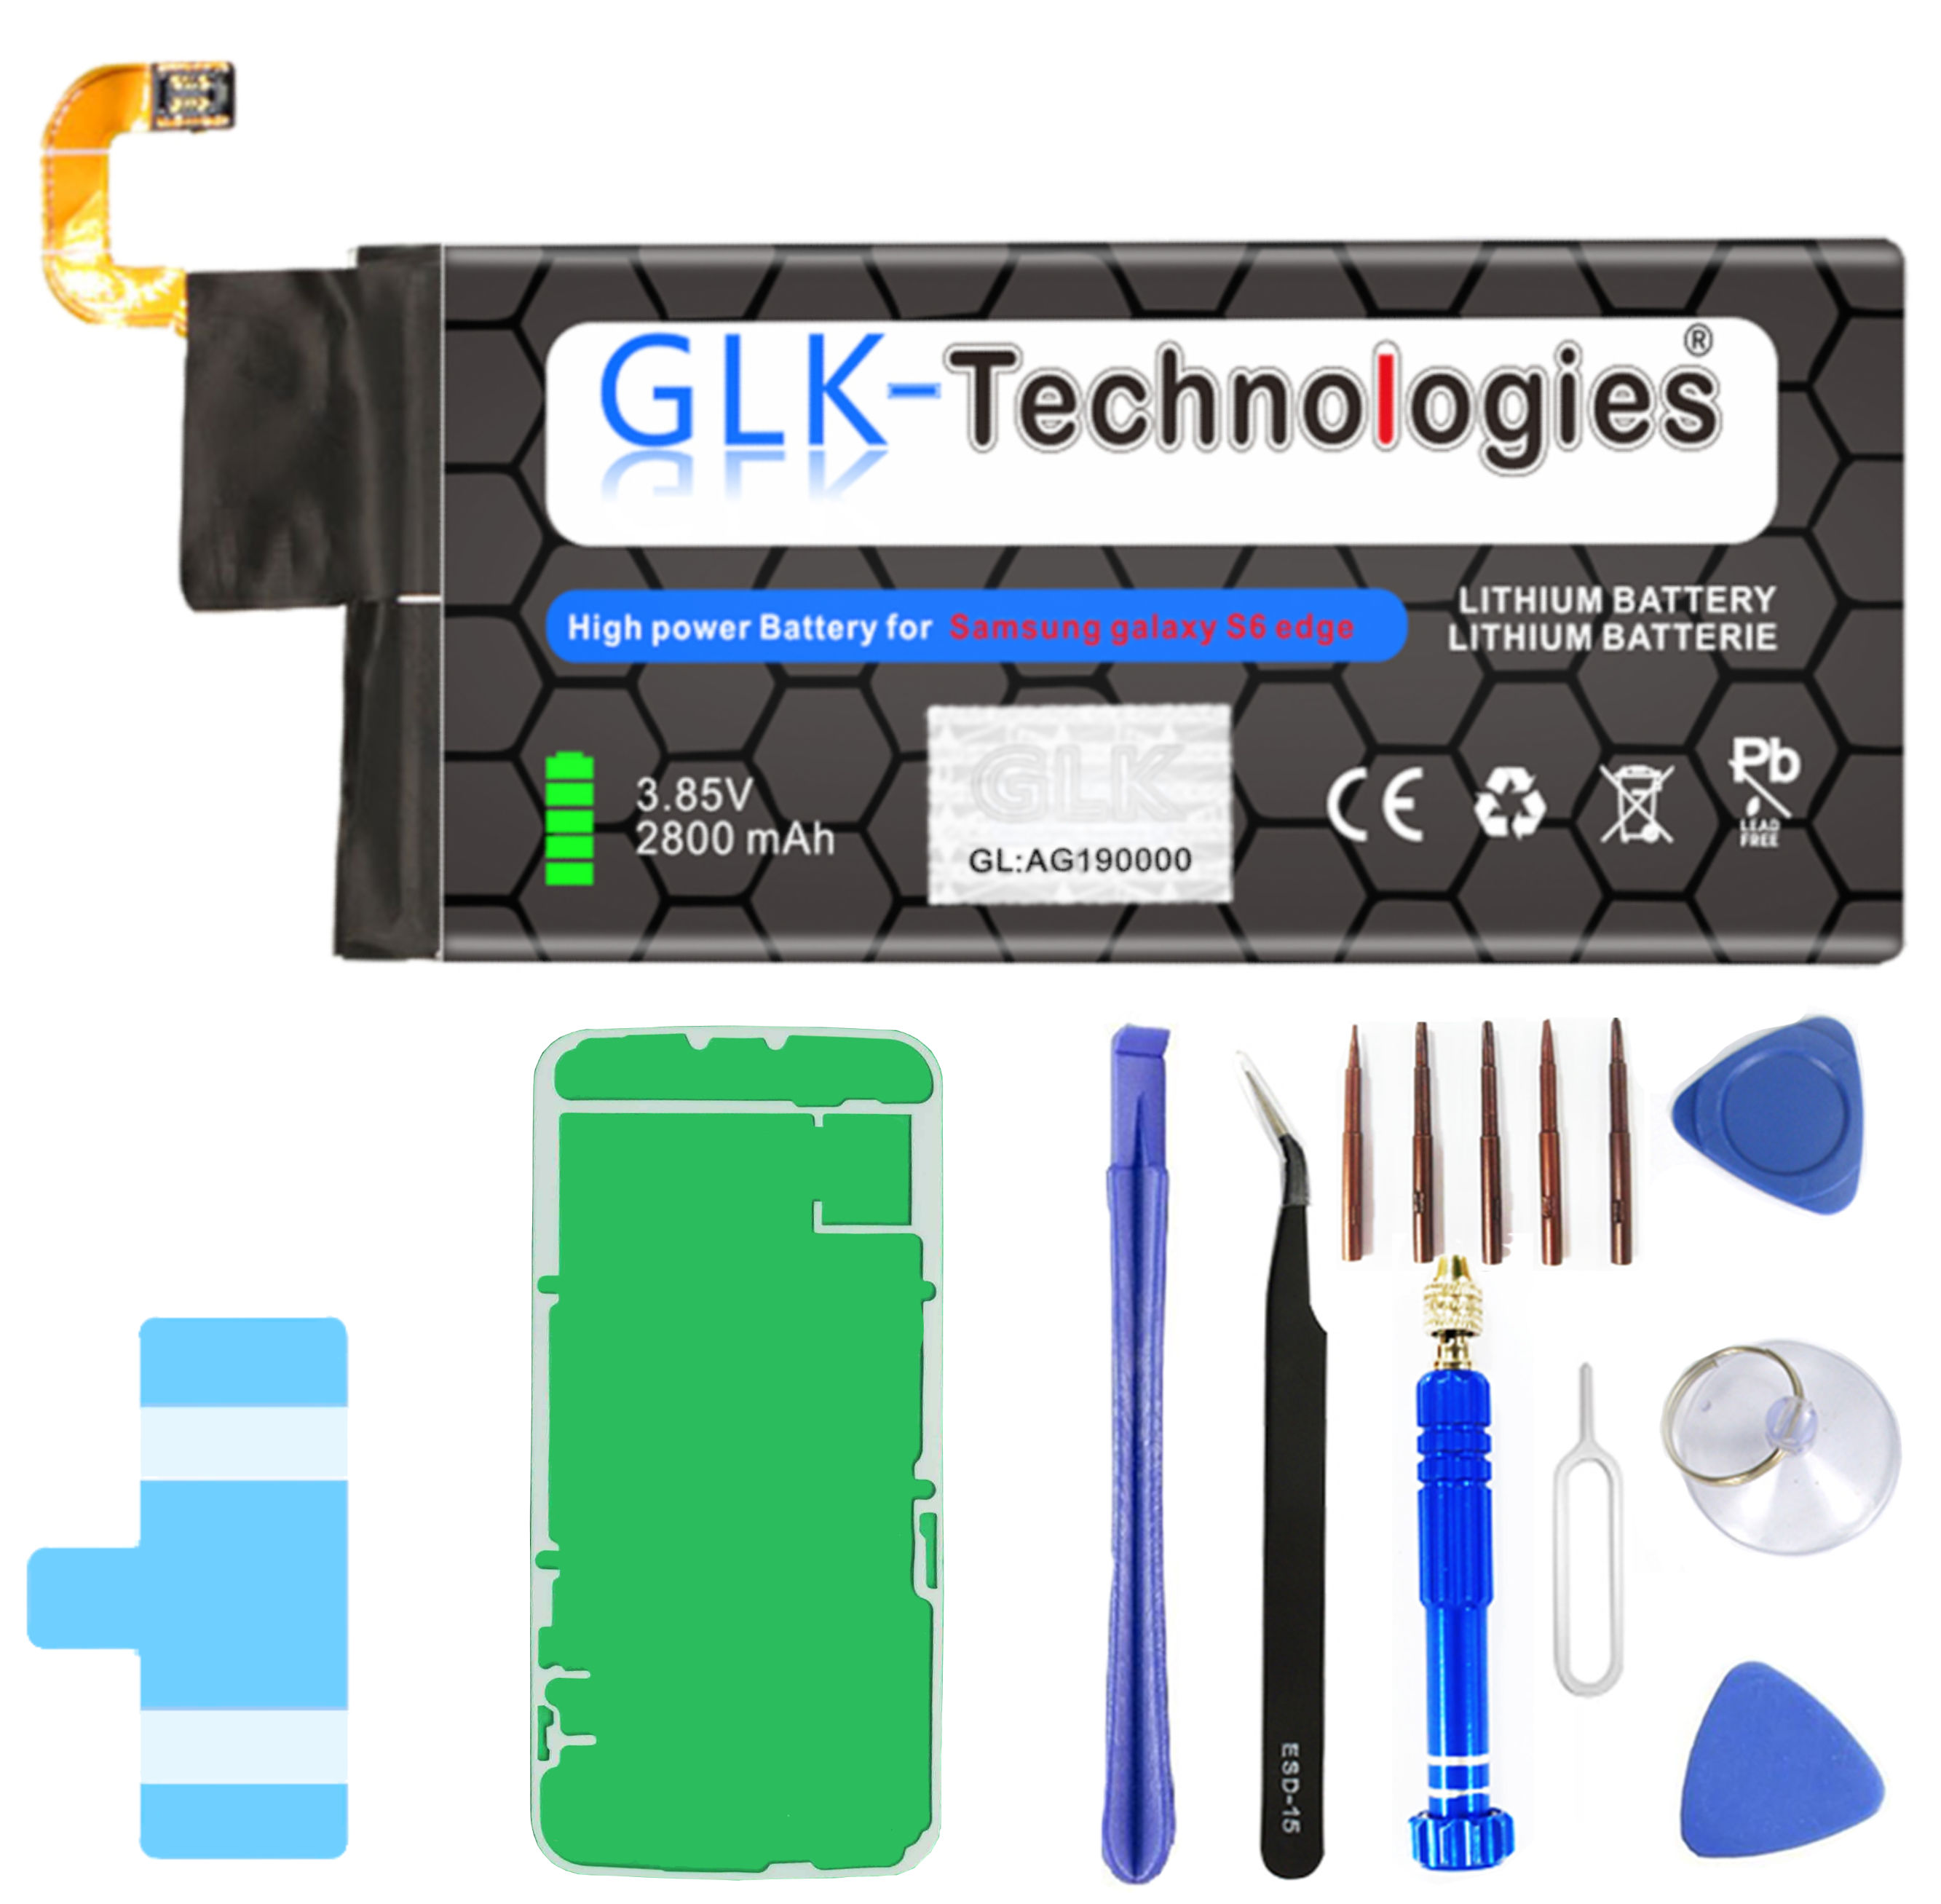 GLK-TECHNOLOGIES Akku für Smartphone Set Samsung Edge Akku Battery inkl. EB-BG925ABE mAh Werkzeug SM-G925F | Galaxy Akku / Lithium-Ionen-Akku Ersatz 2800 S6